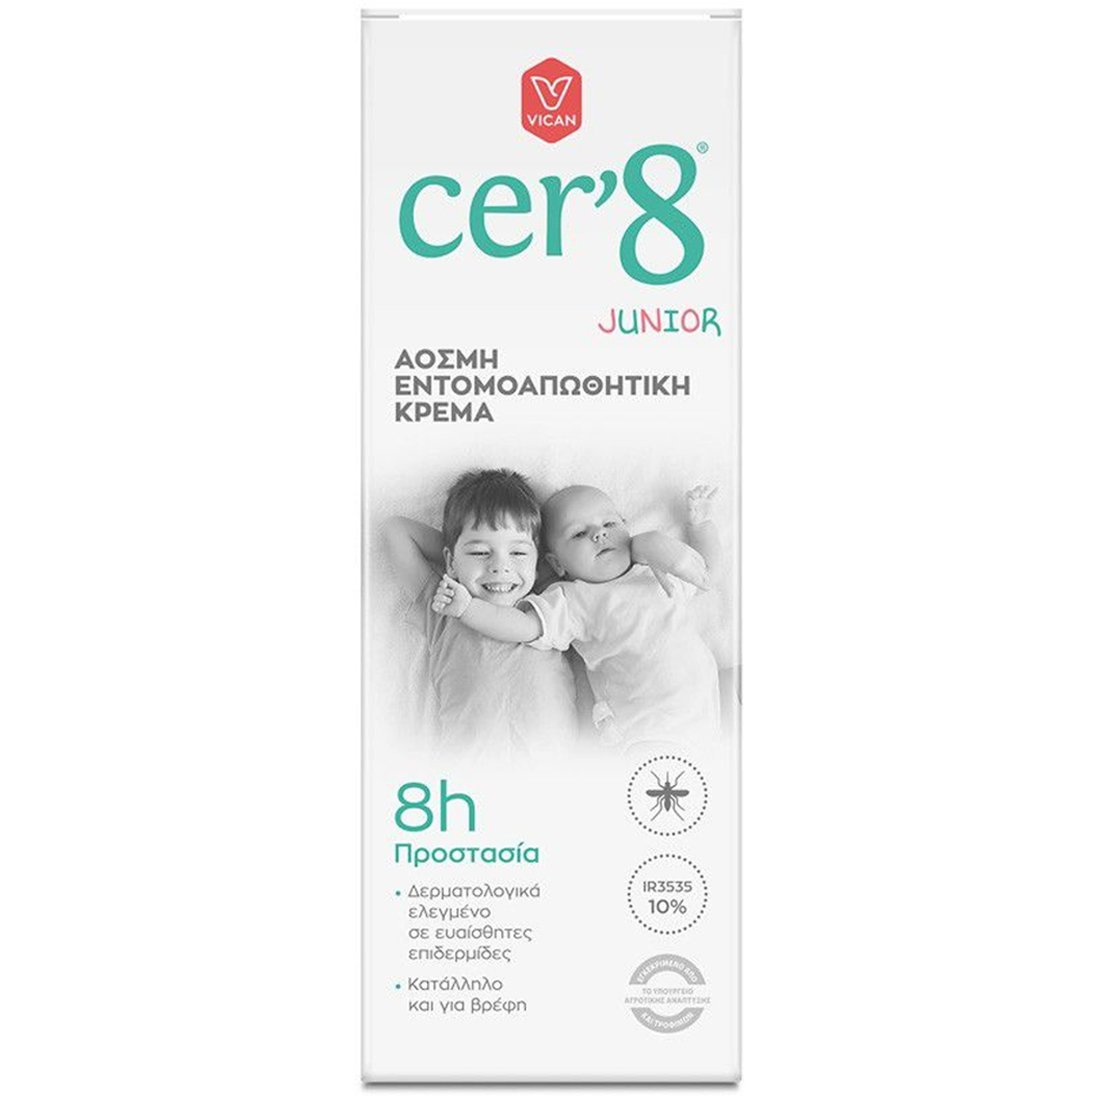 Cer'8 Cer'8 Junior Odorless Anti-Mosquito Cream Άοσμη Εντομοαπωθητική Κρέμα για Παιδιά 150ml